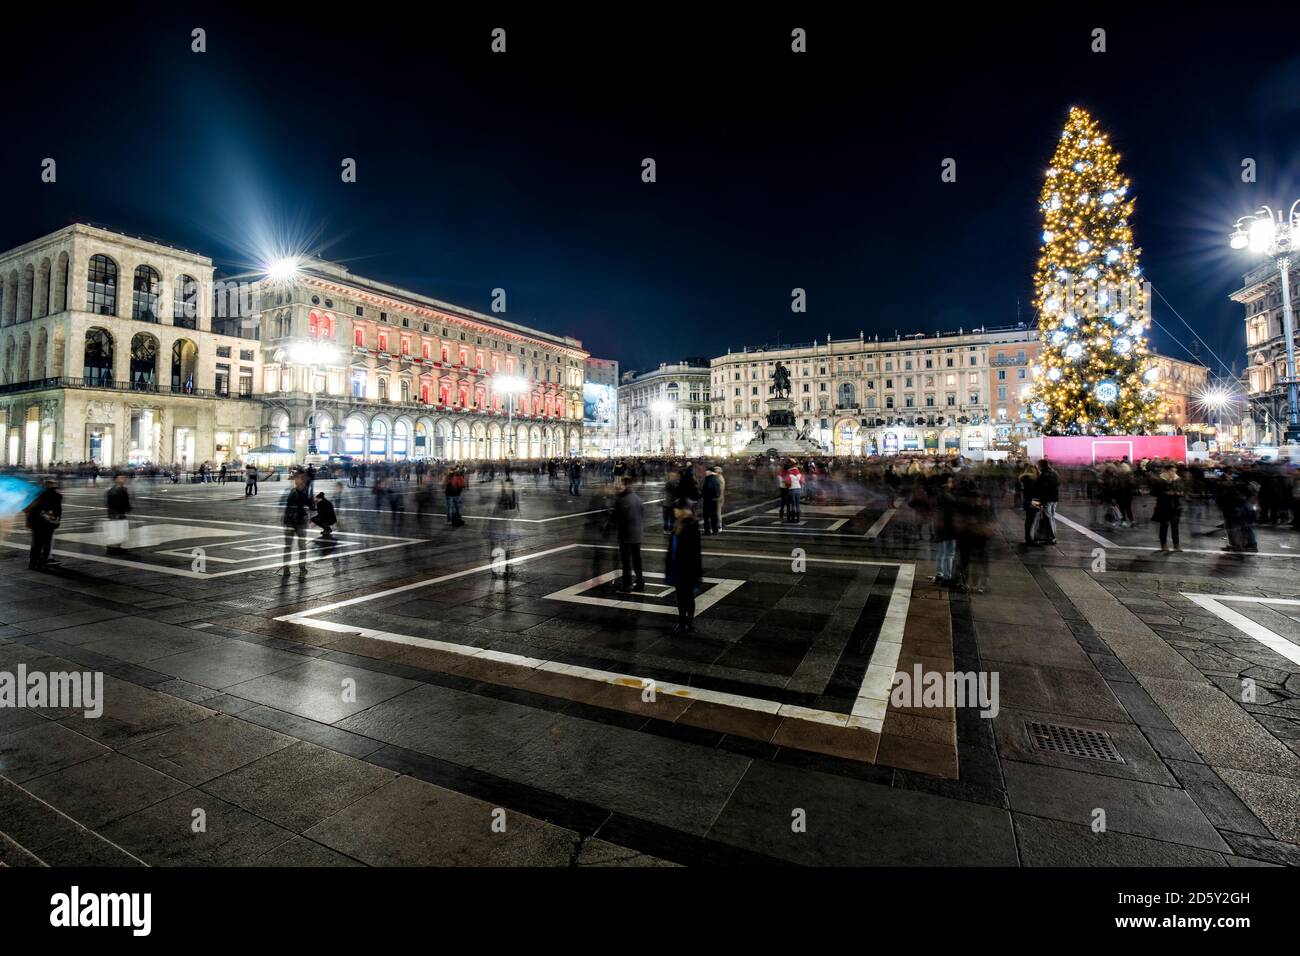 Italy, Milan, Piazza del Duomo at night with Christmas tree Stock Photo